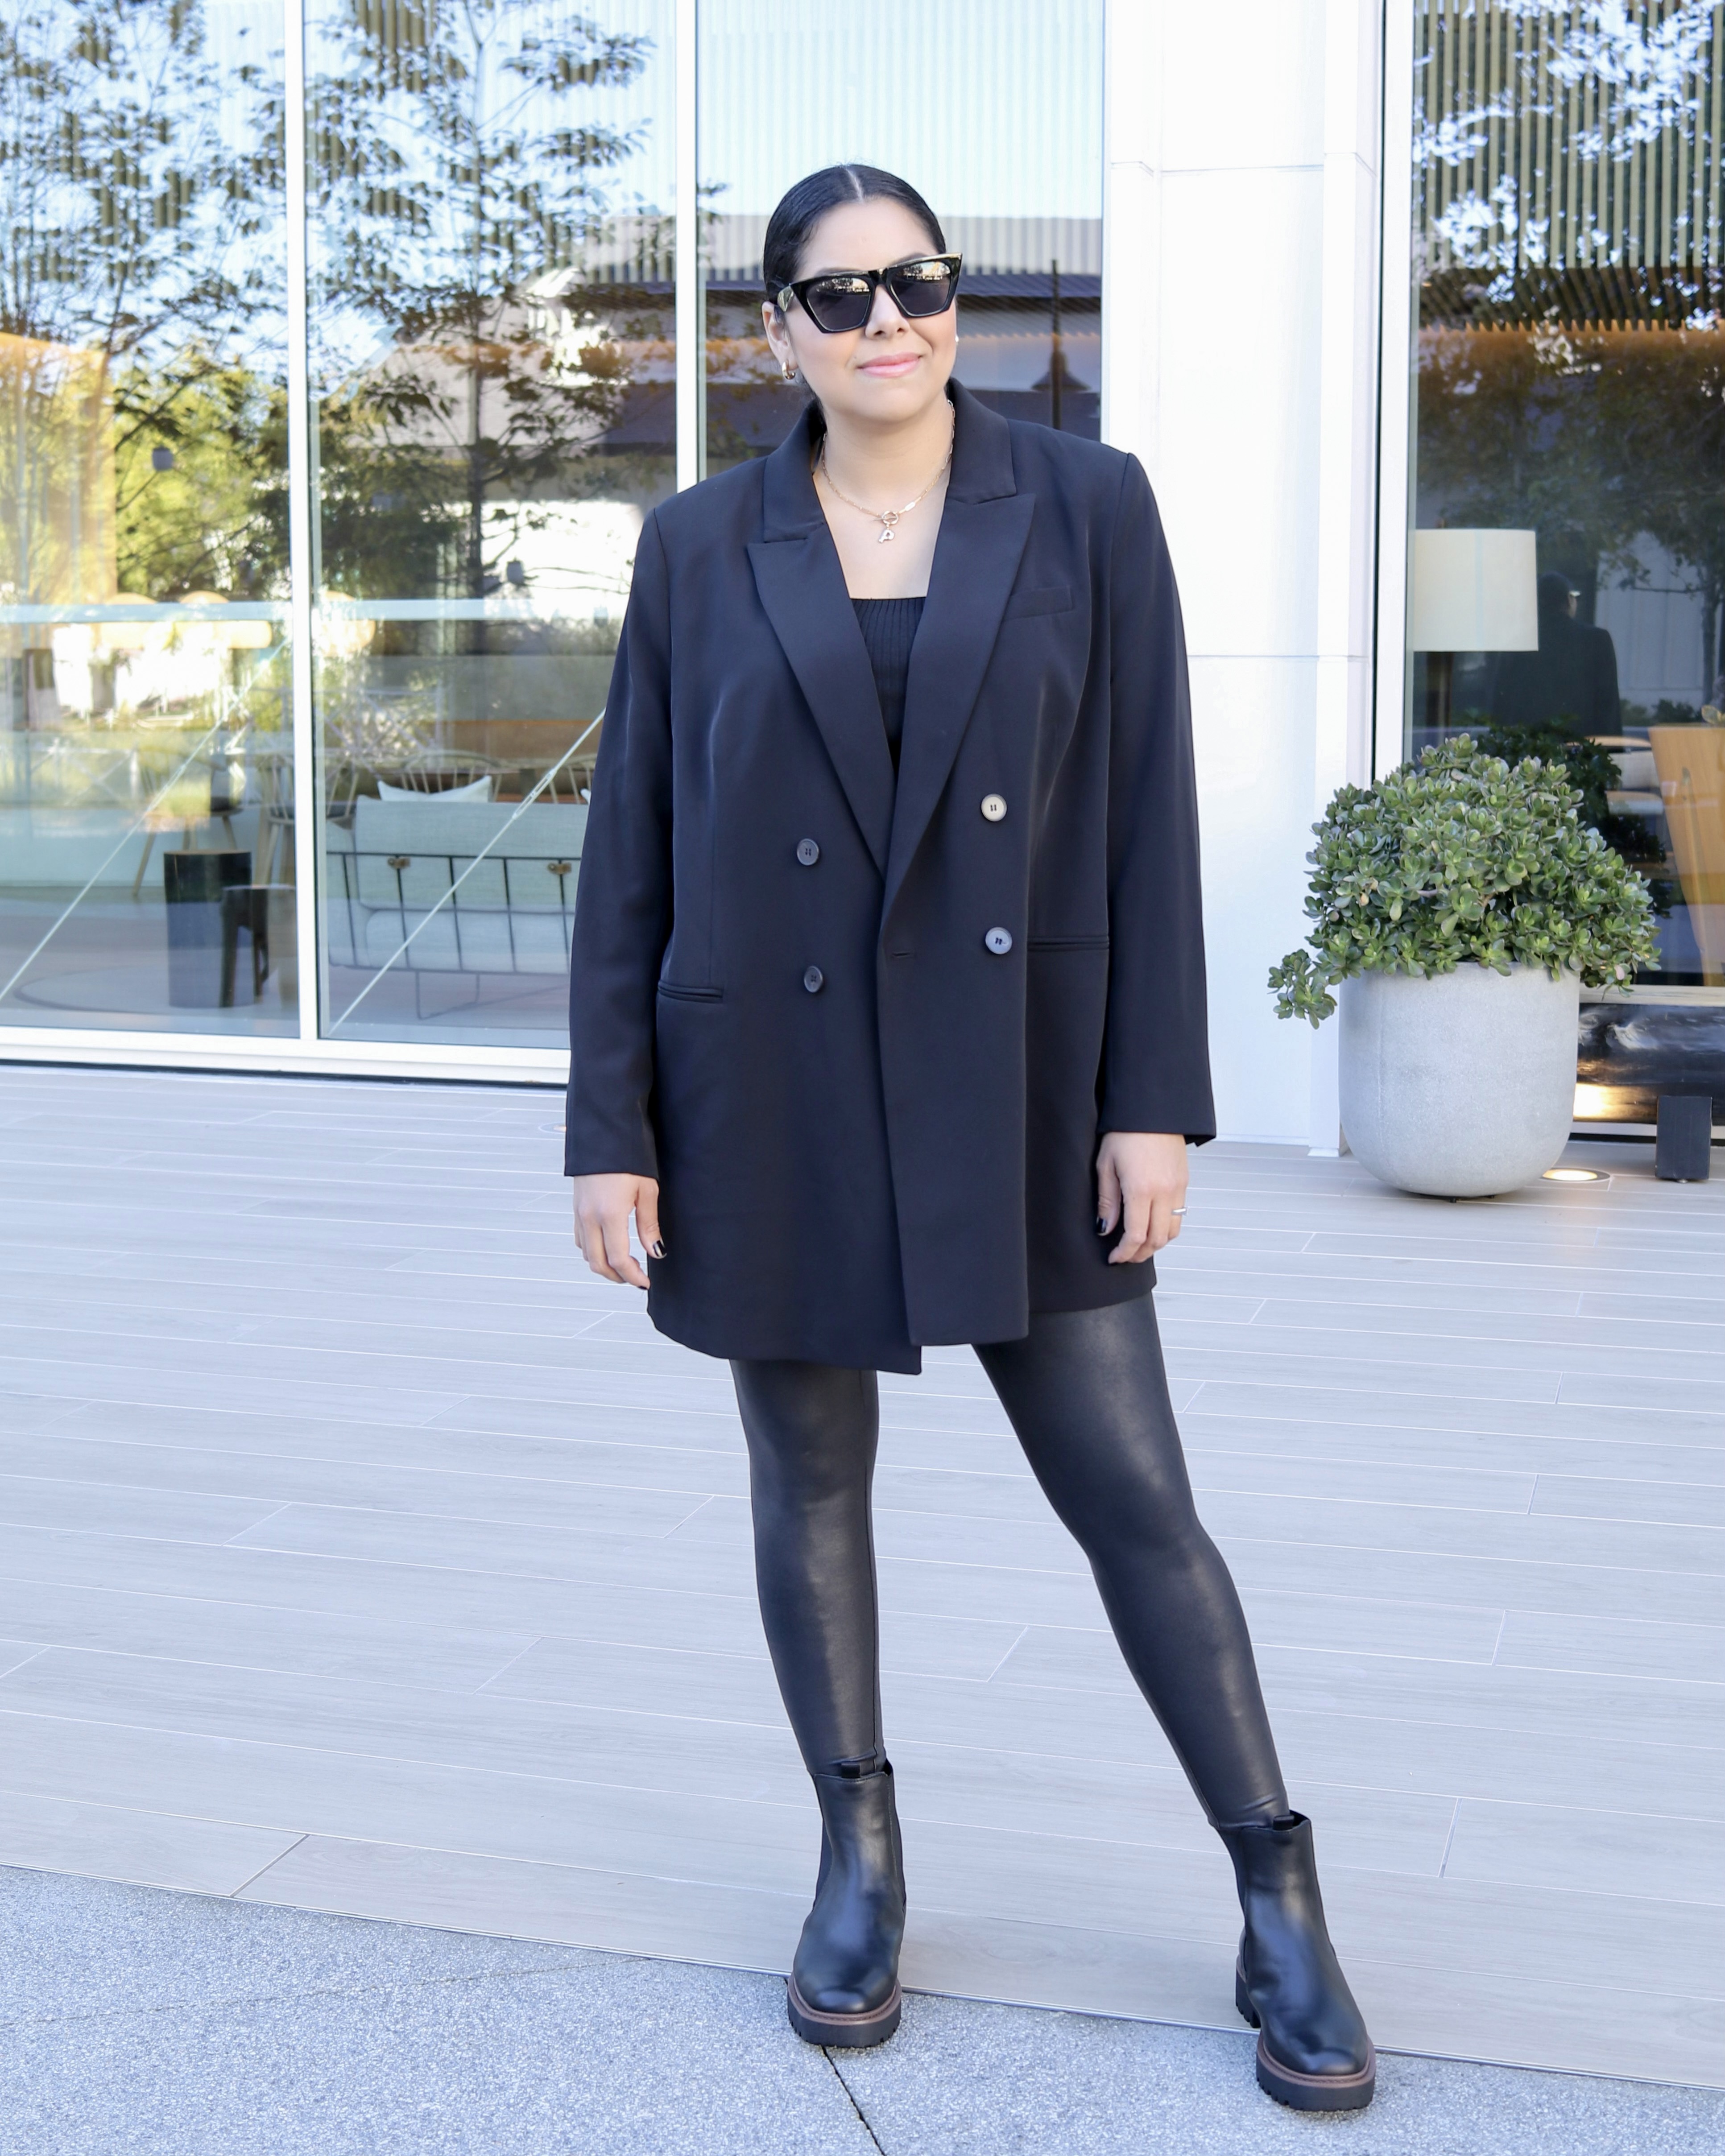 https://lilbitsofchic.com/wp-content/uploads/2021/11/oversized-black-blazer-women-outfit.jpg